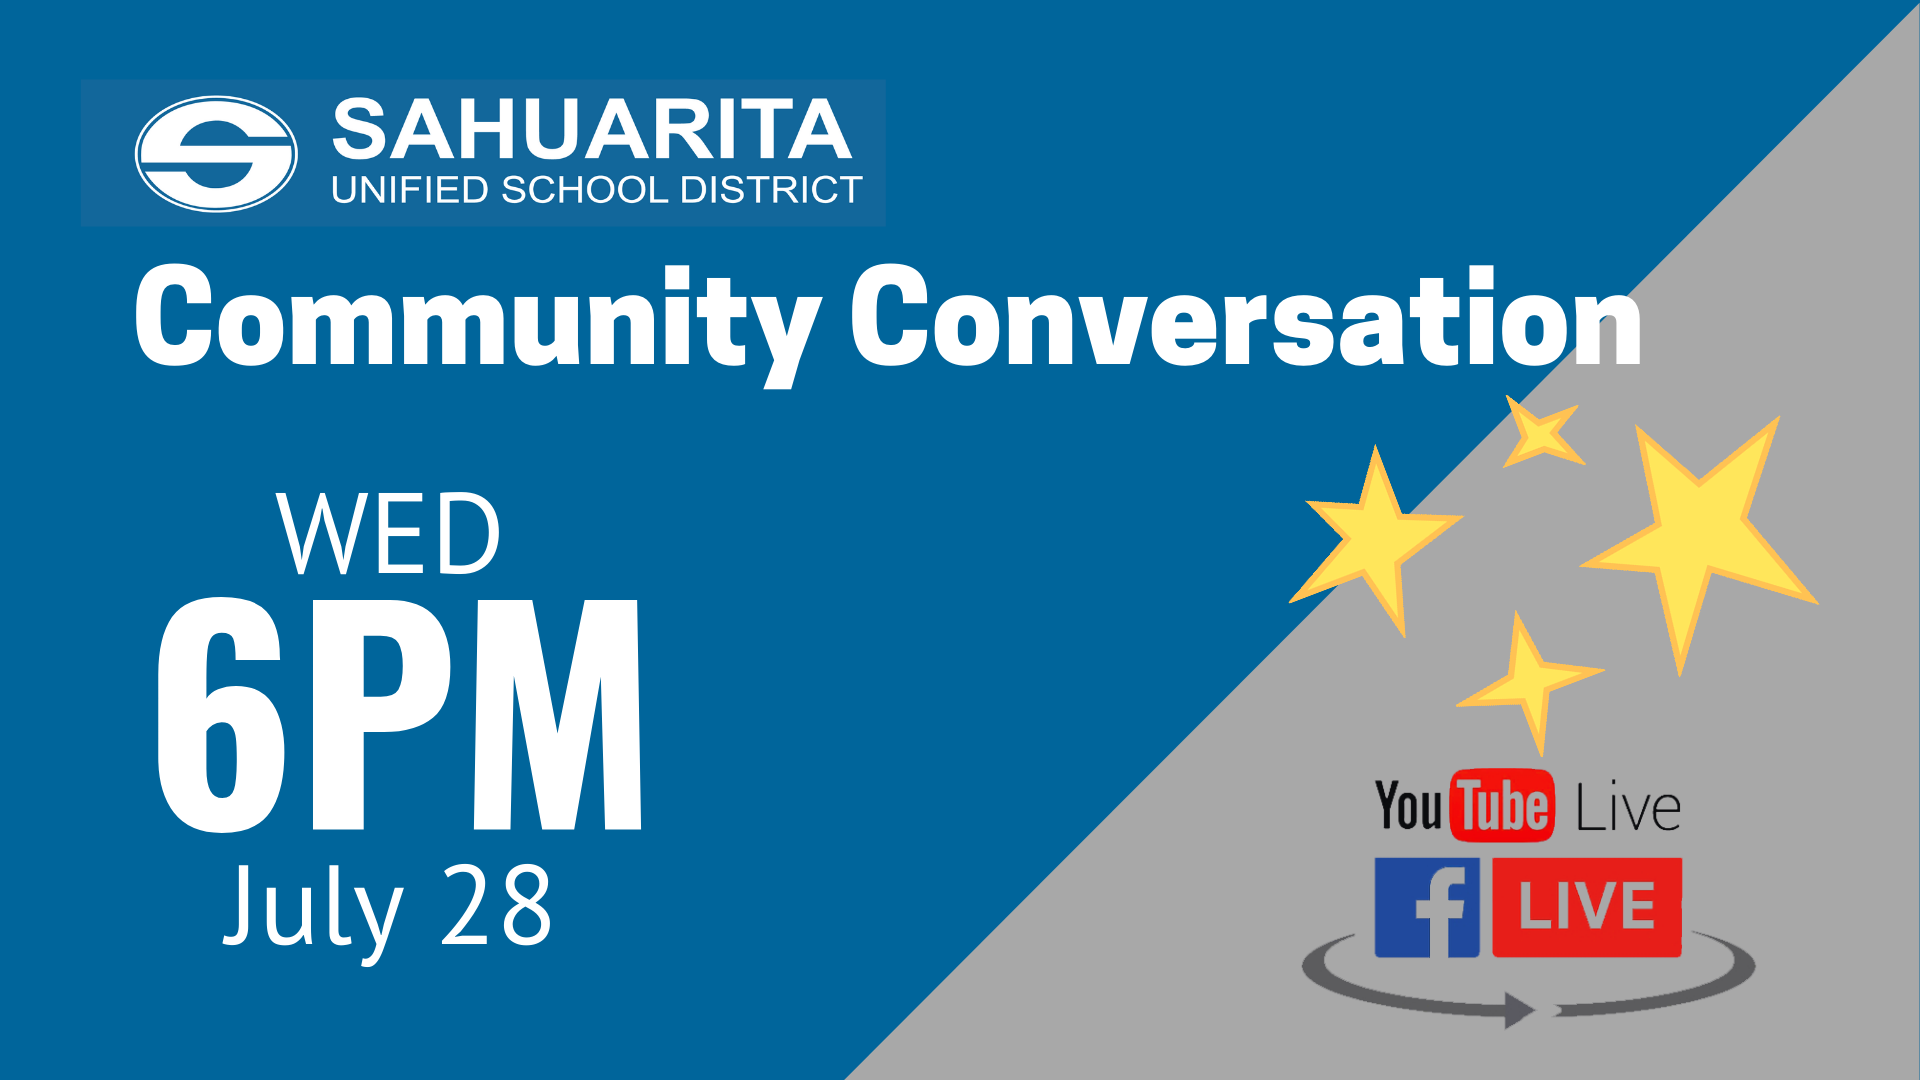 Community Conversation Wed 6 PM July 28